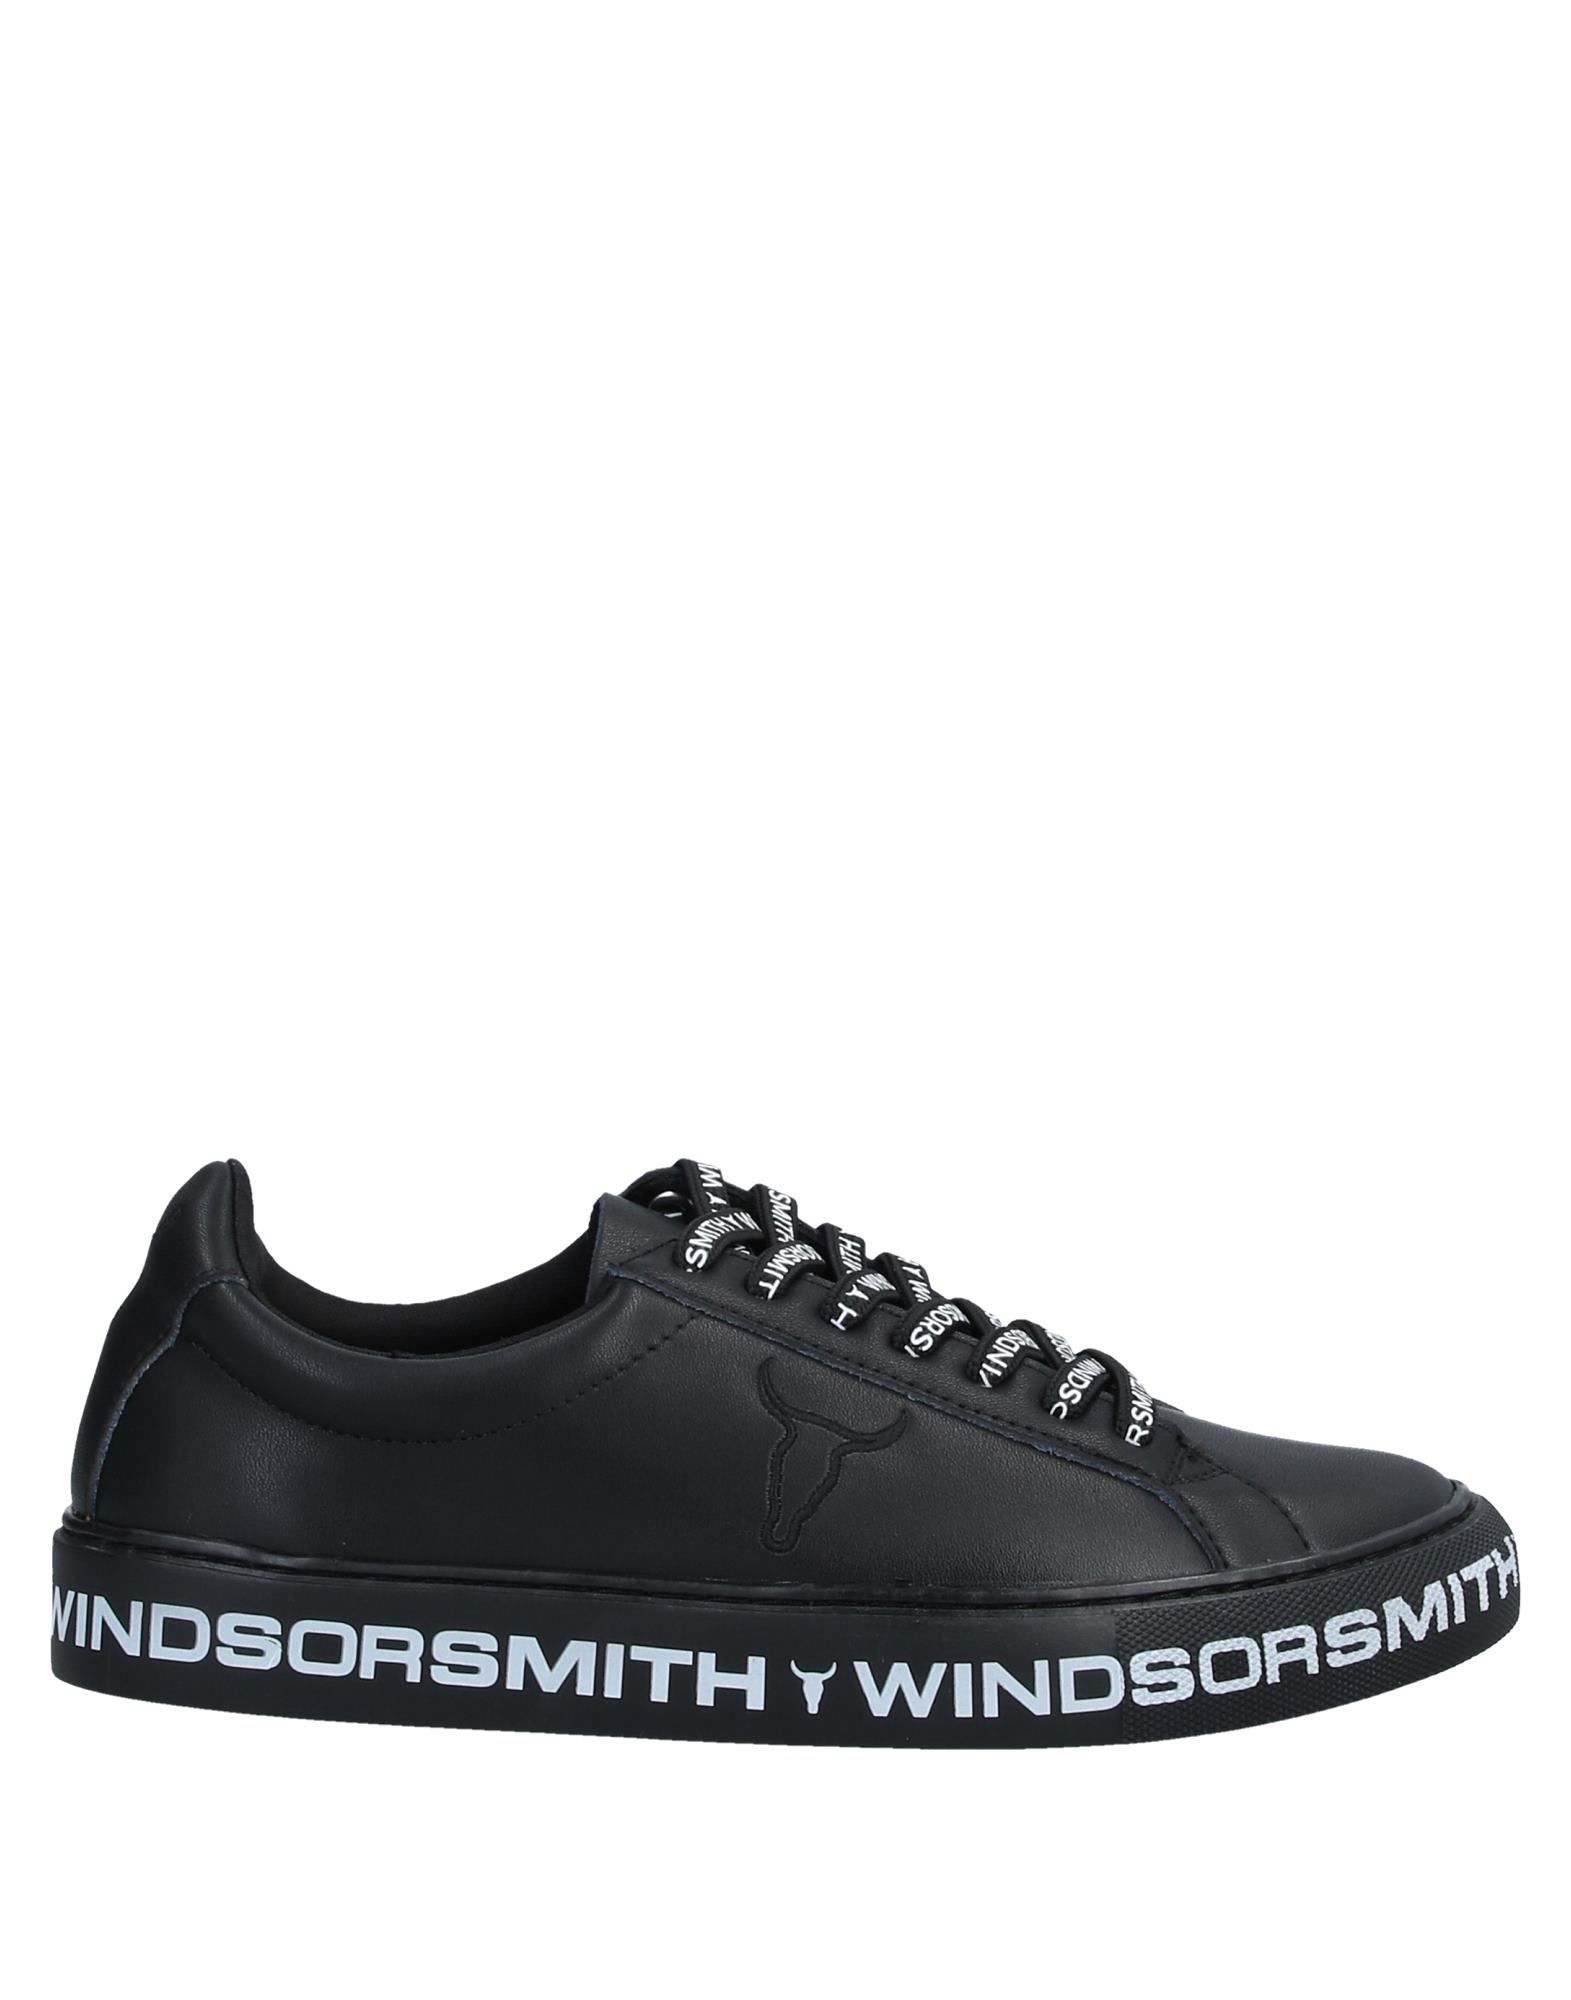 WINDSOR SMITH Sneakers Damen Schwarz von WINDSOR SMITH